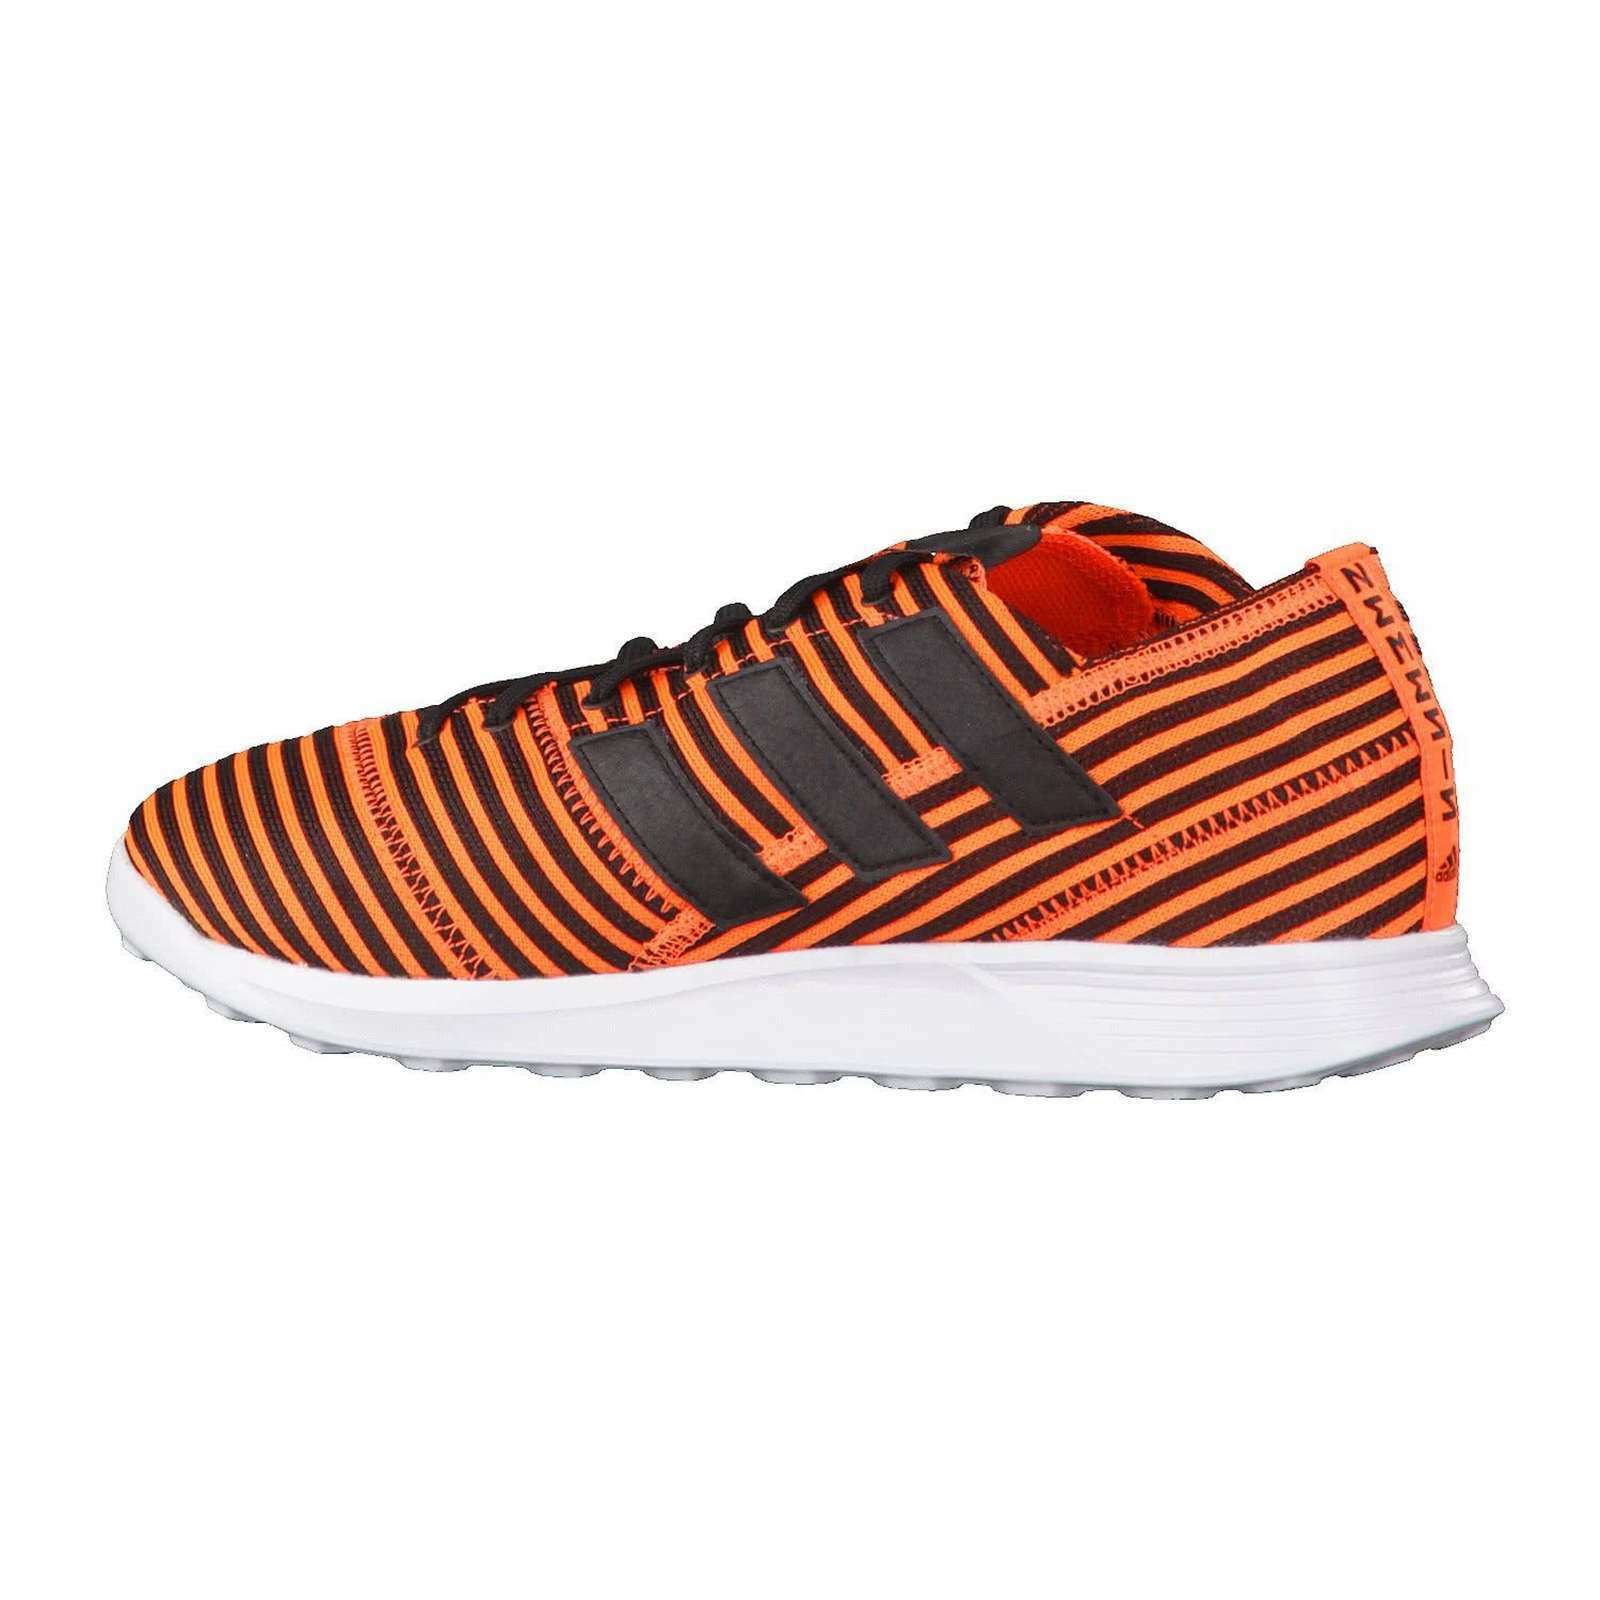 olvidar Belicoso muelle Adidas Nemeziz 17.4 Tr Orange/Black Textile Trainers Shoes BY2468 –  Smfashiontrends